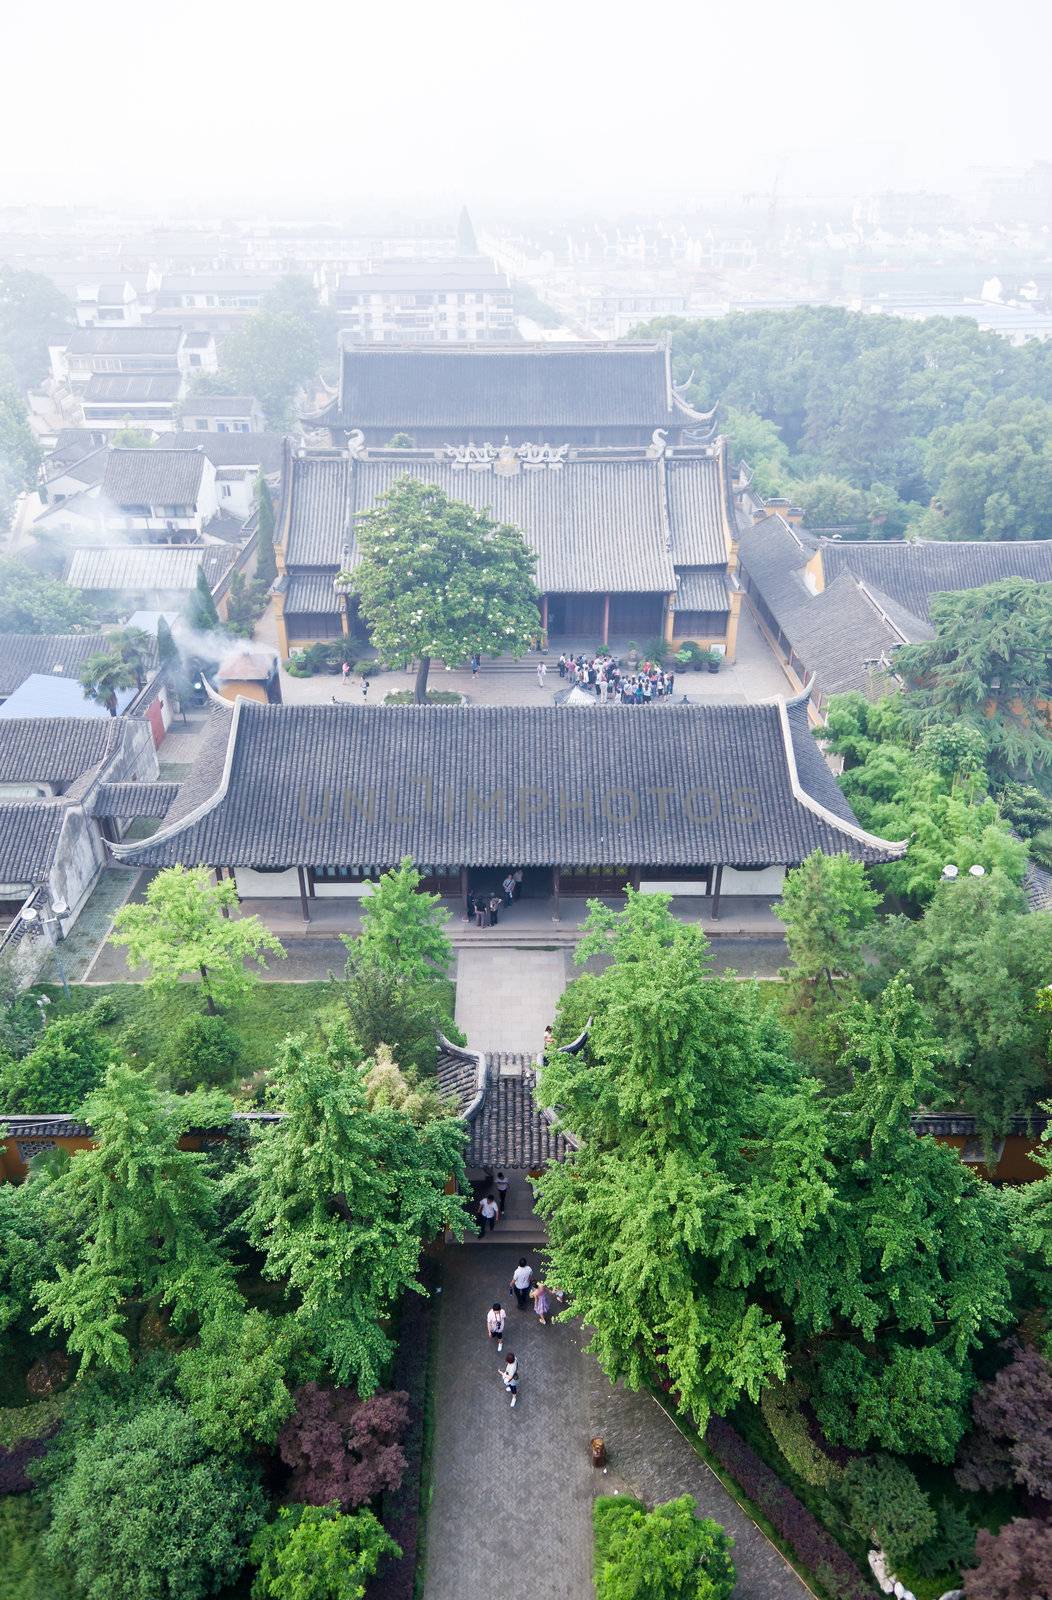 aerial view of Suzhou city China  by gary718